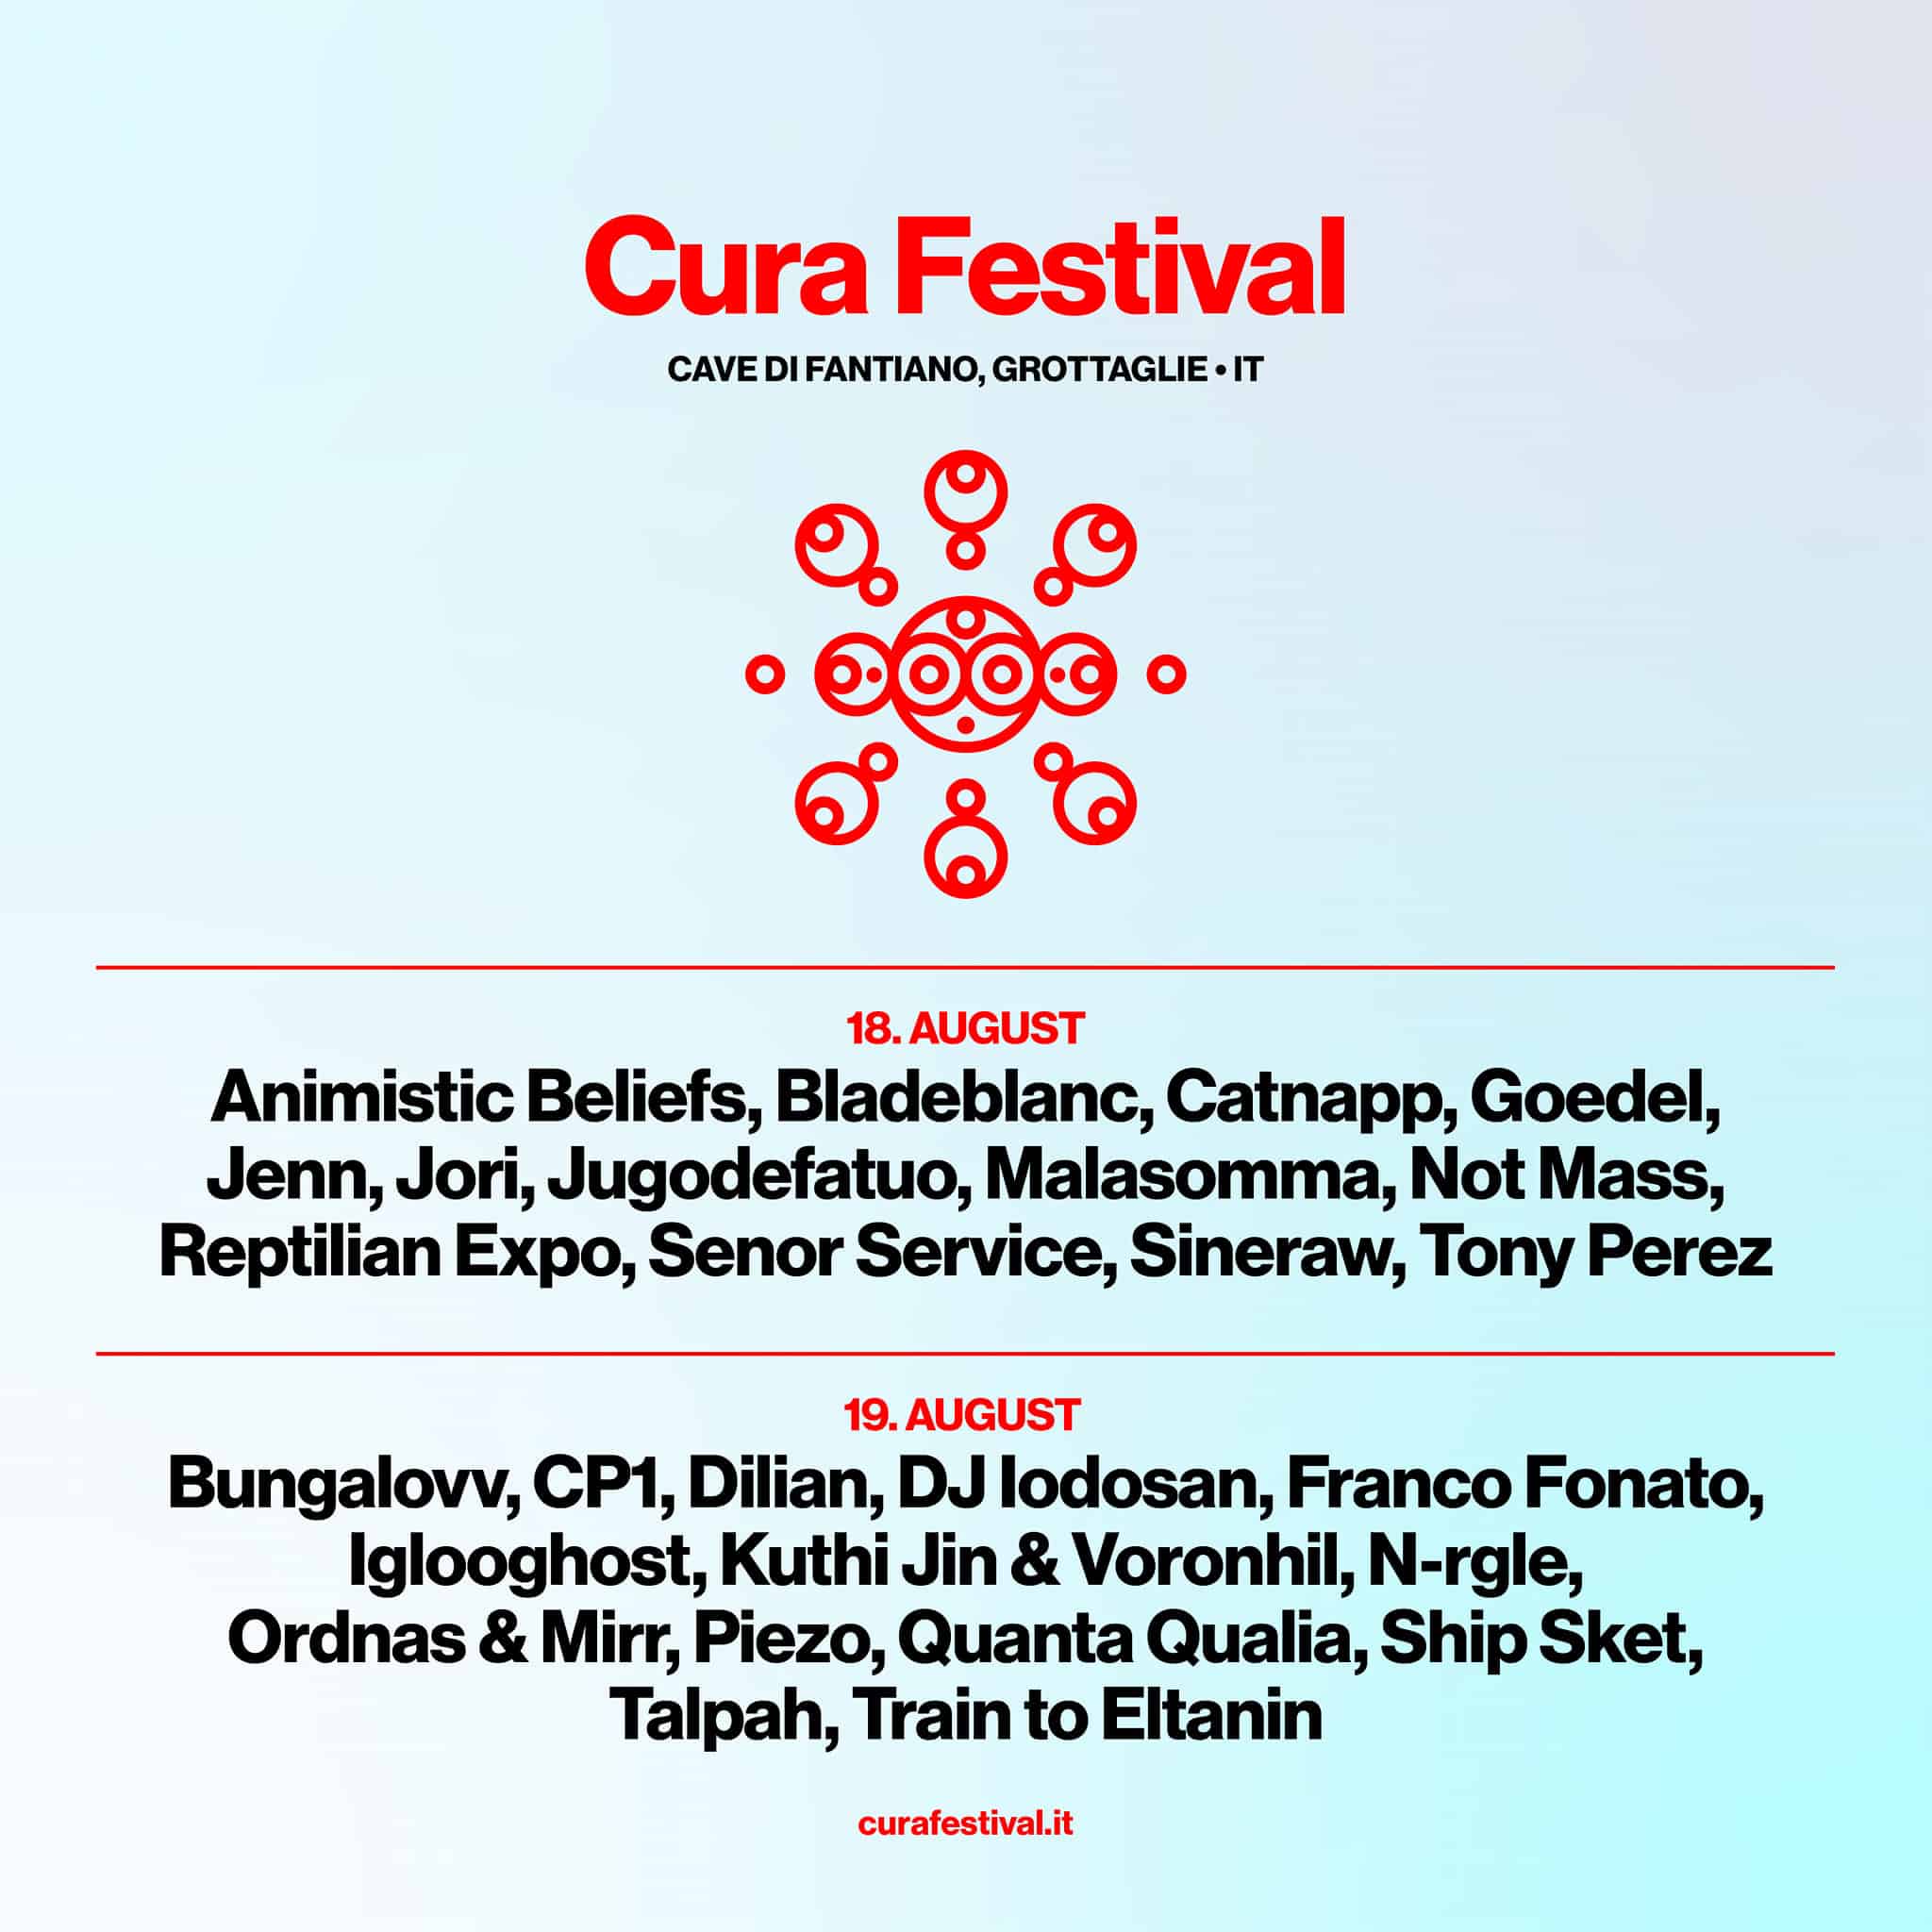 Cura Festival 2022 - Lineup